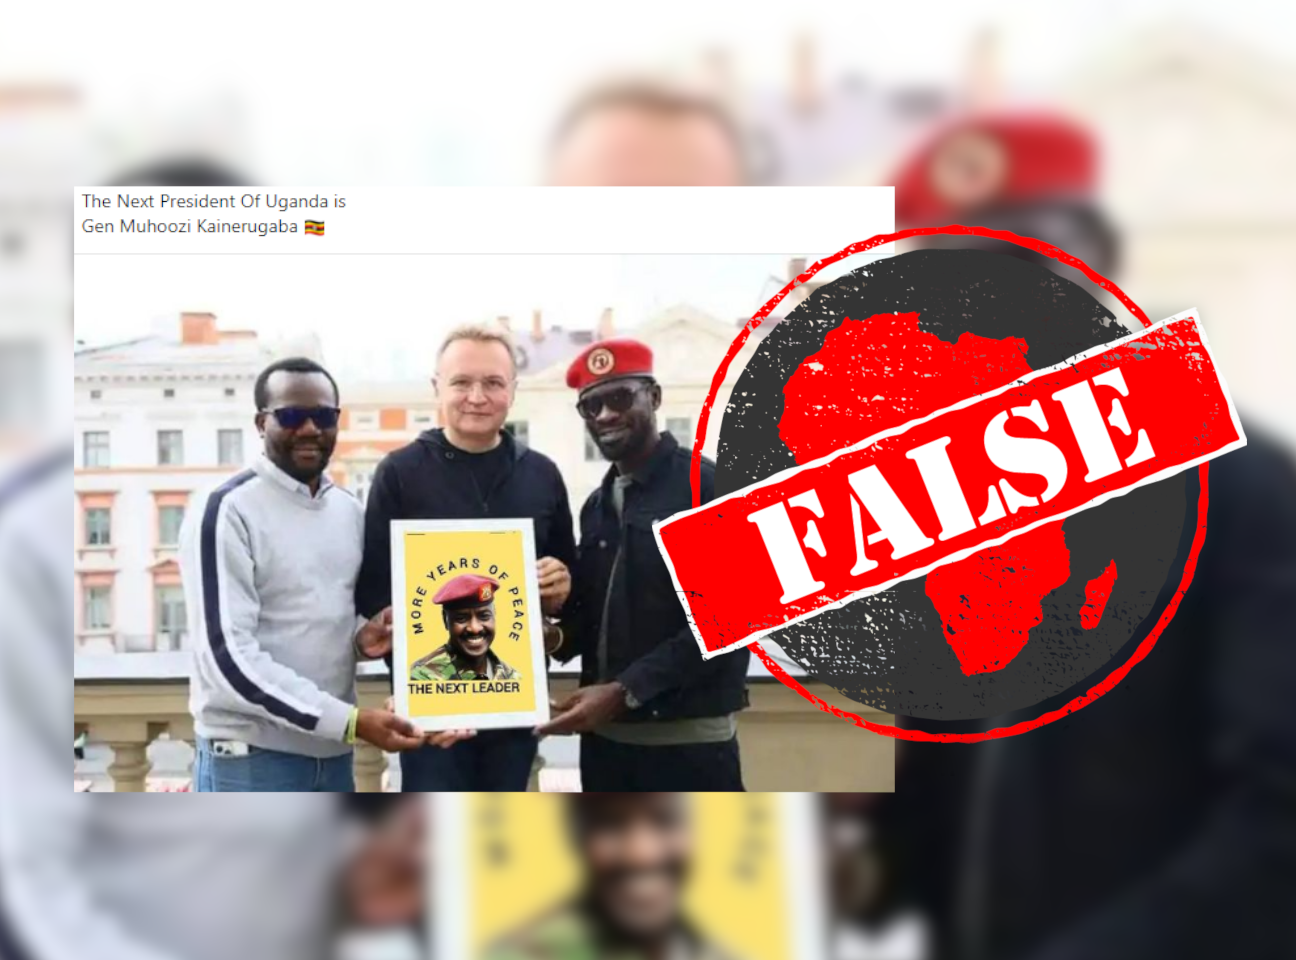 Uganda_False